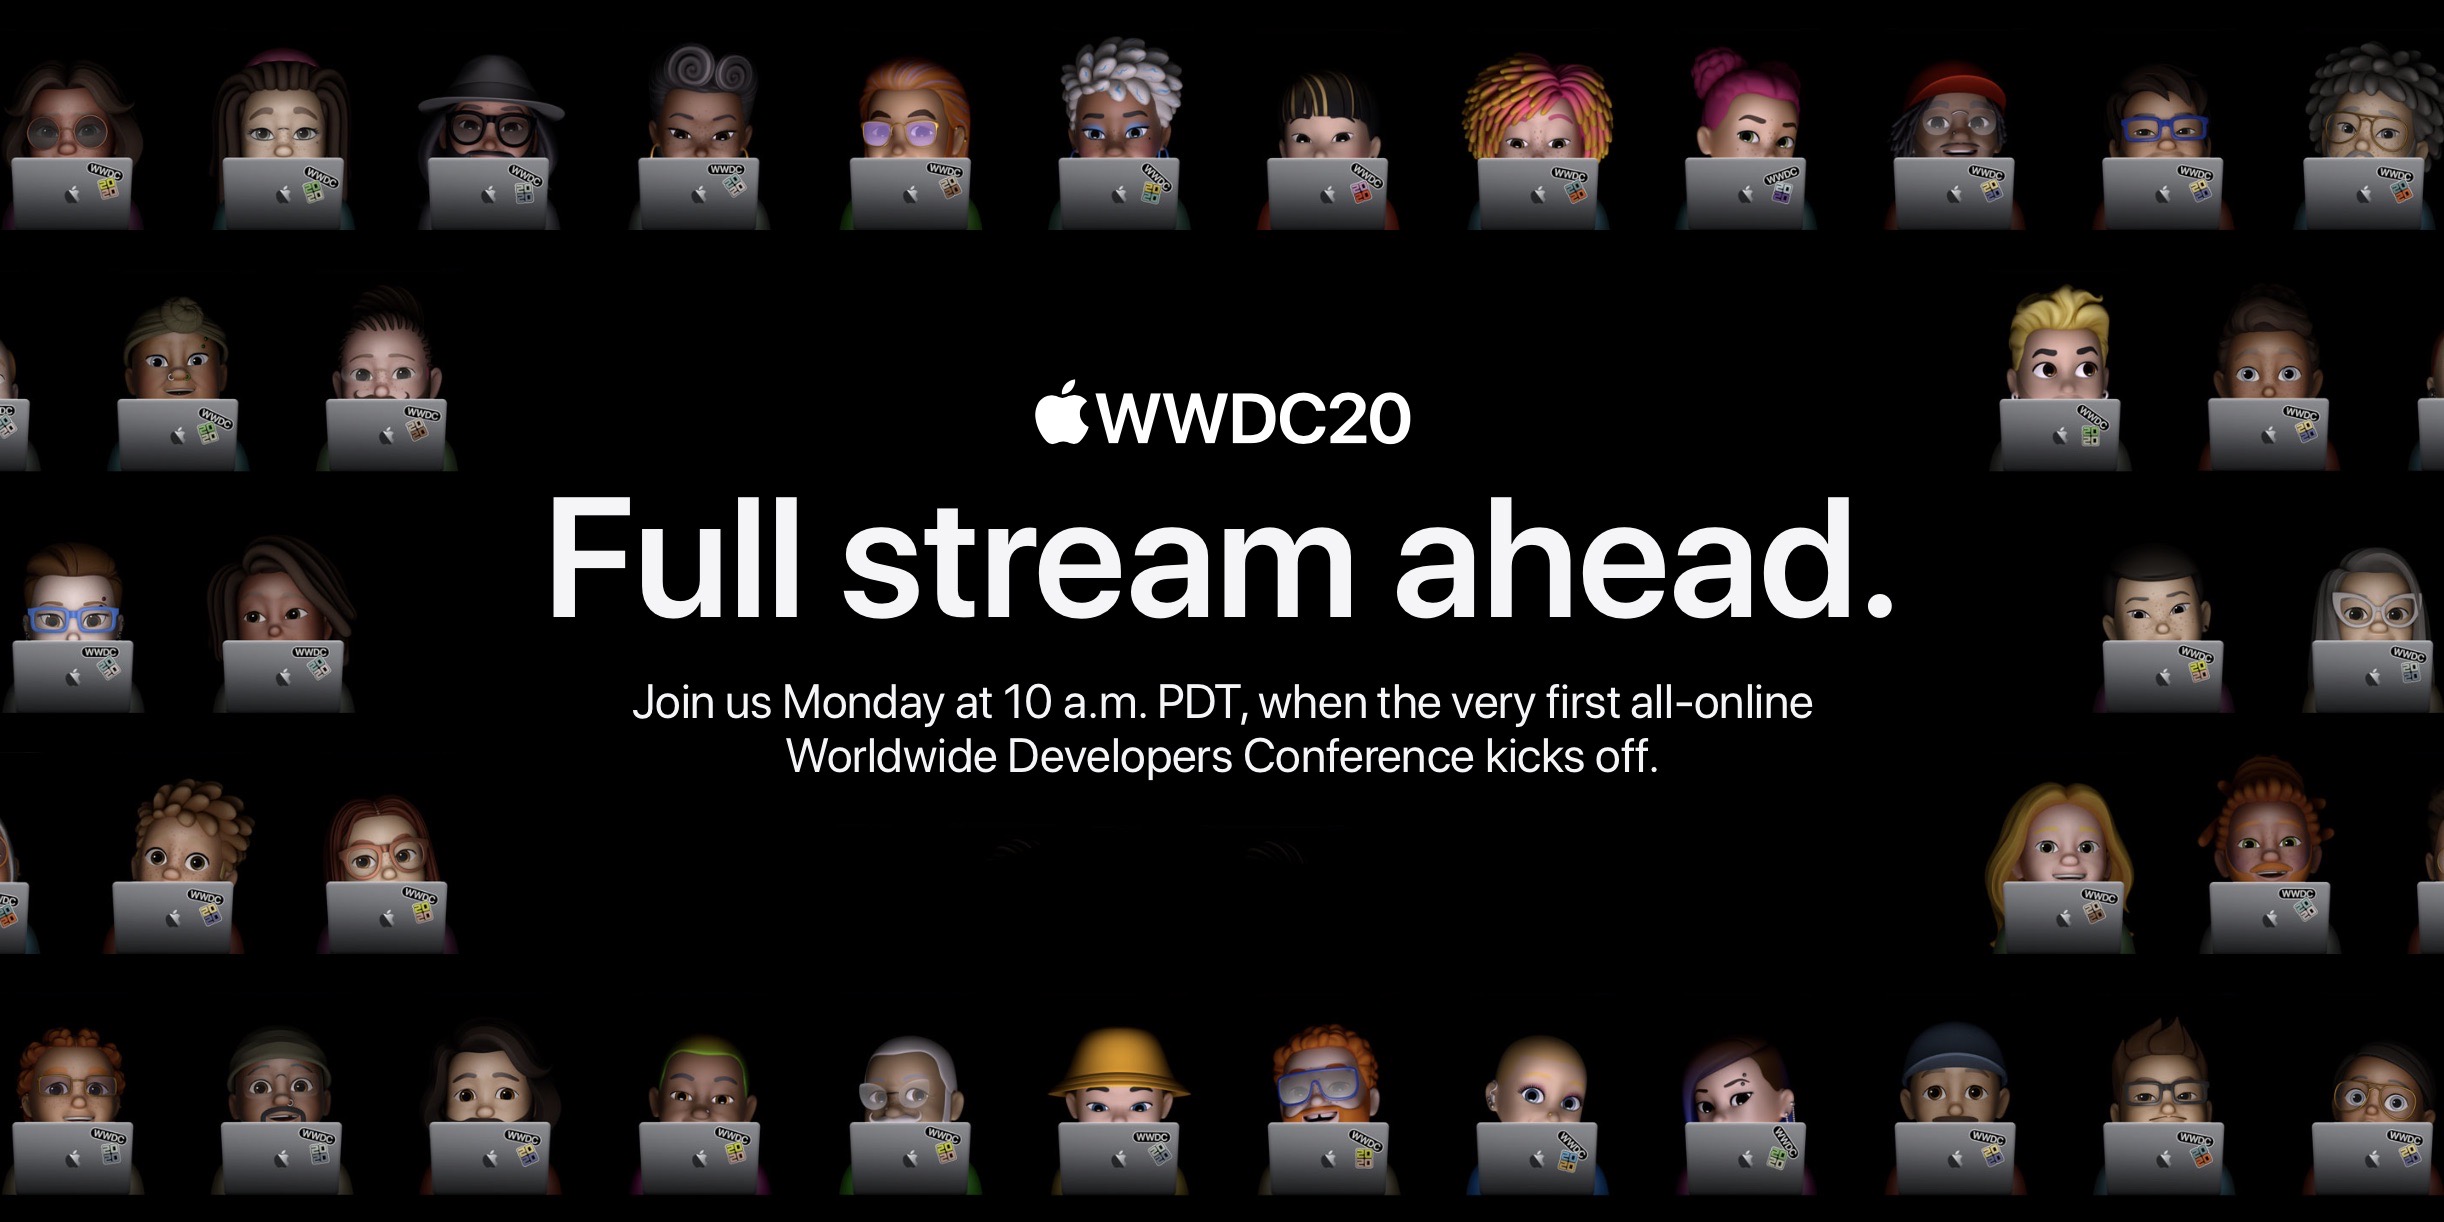 WWDC 2020 News Hub Live Blog iOS 14, watchOS 7, more 9to5Mac